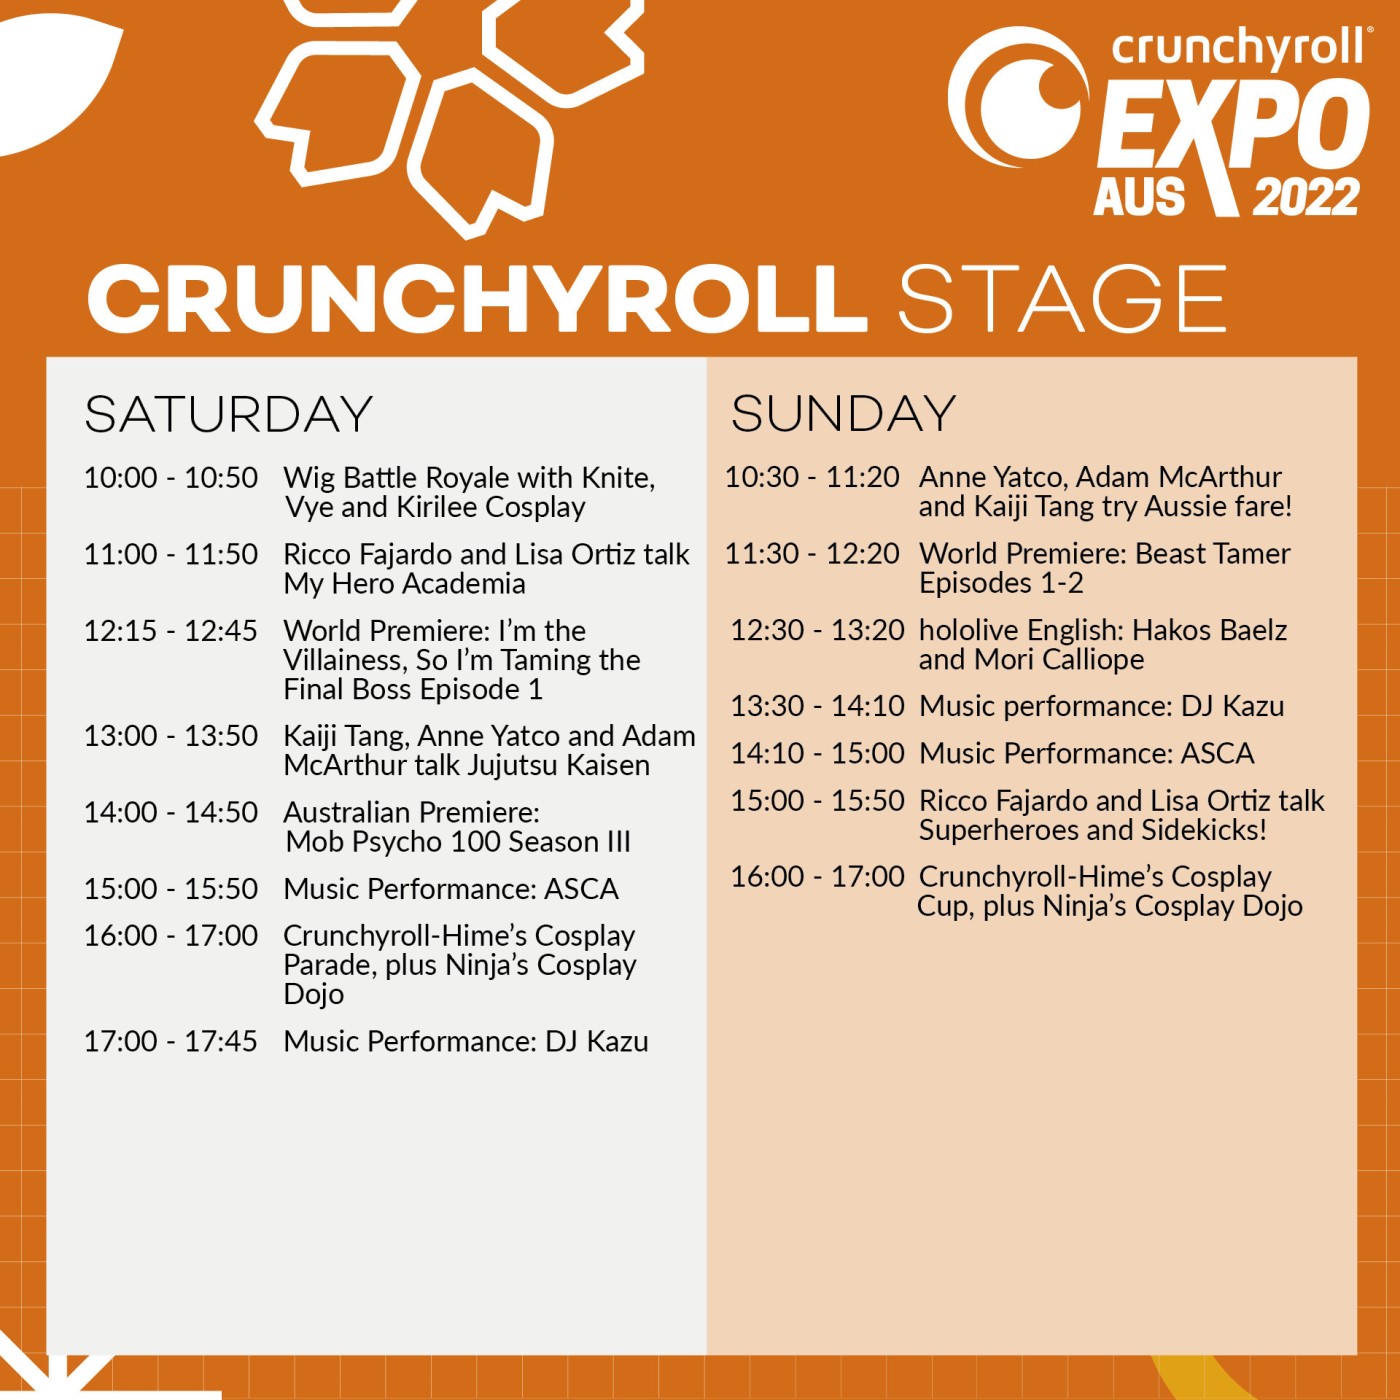 Crunchyroll Crunchyroll Expo Australia Releases Full Schedule of